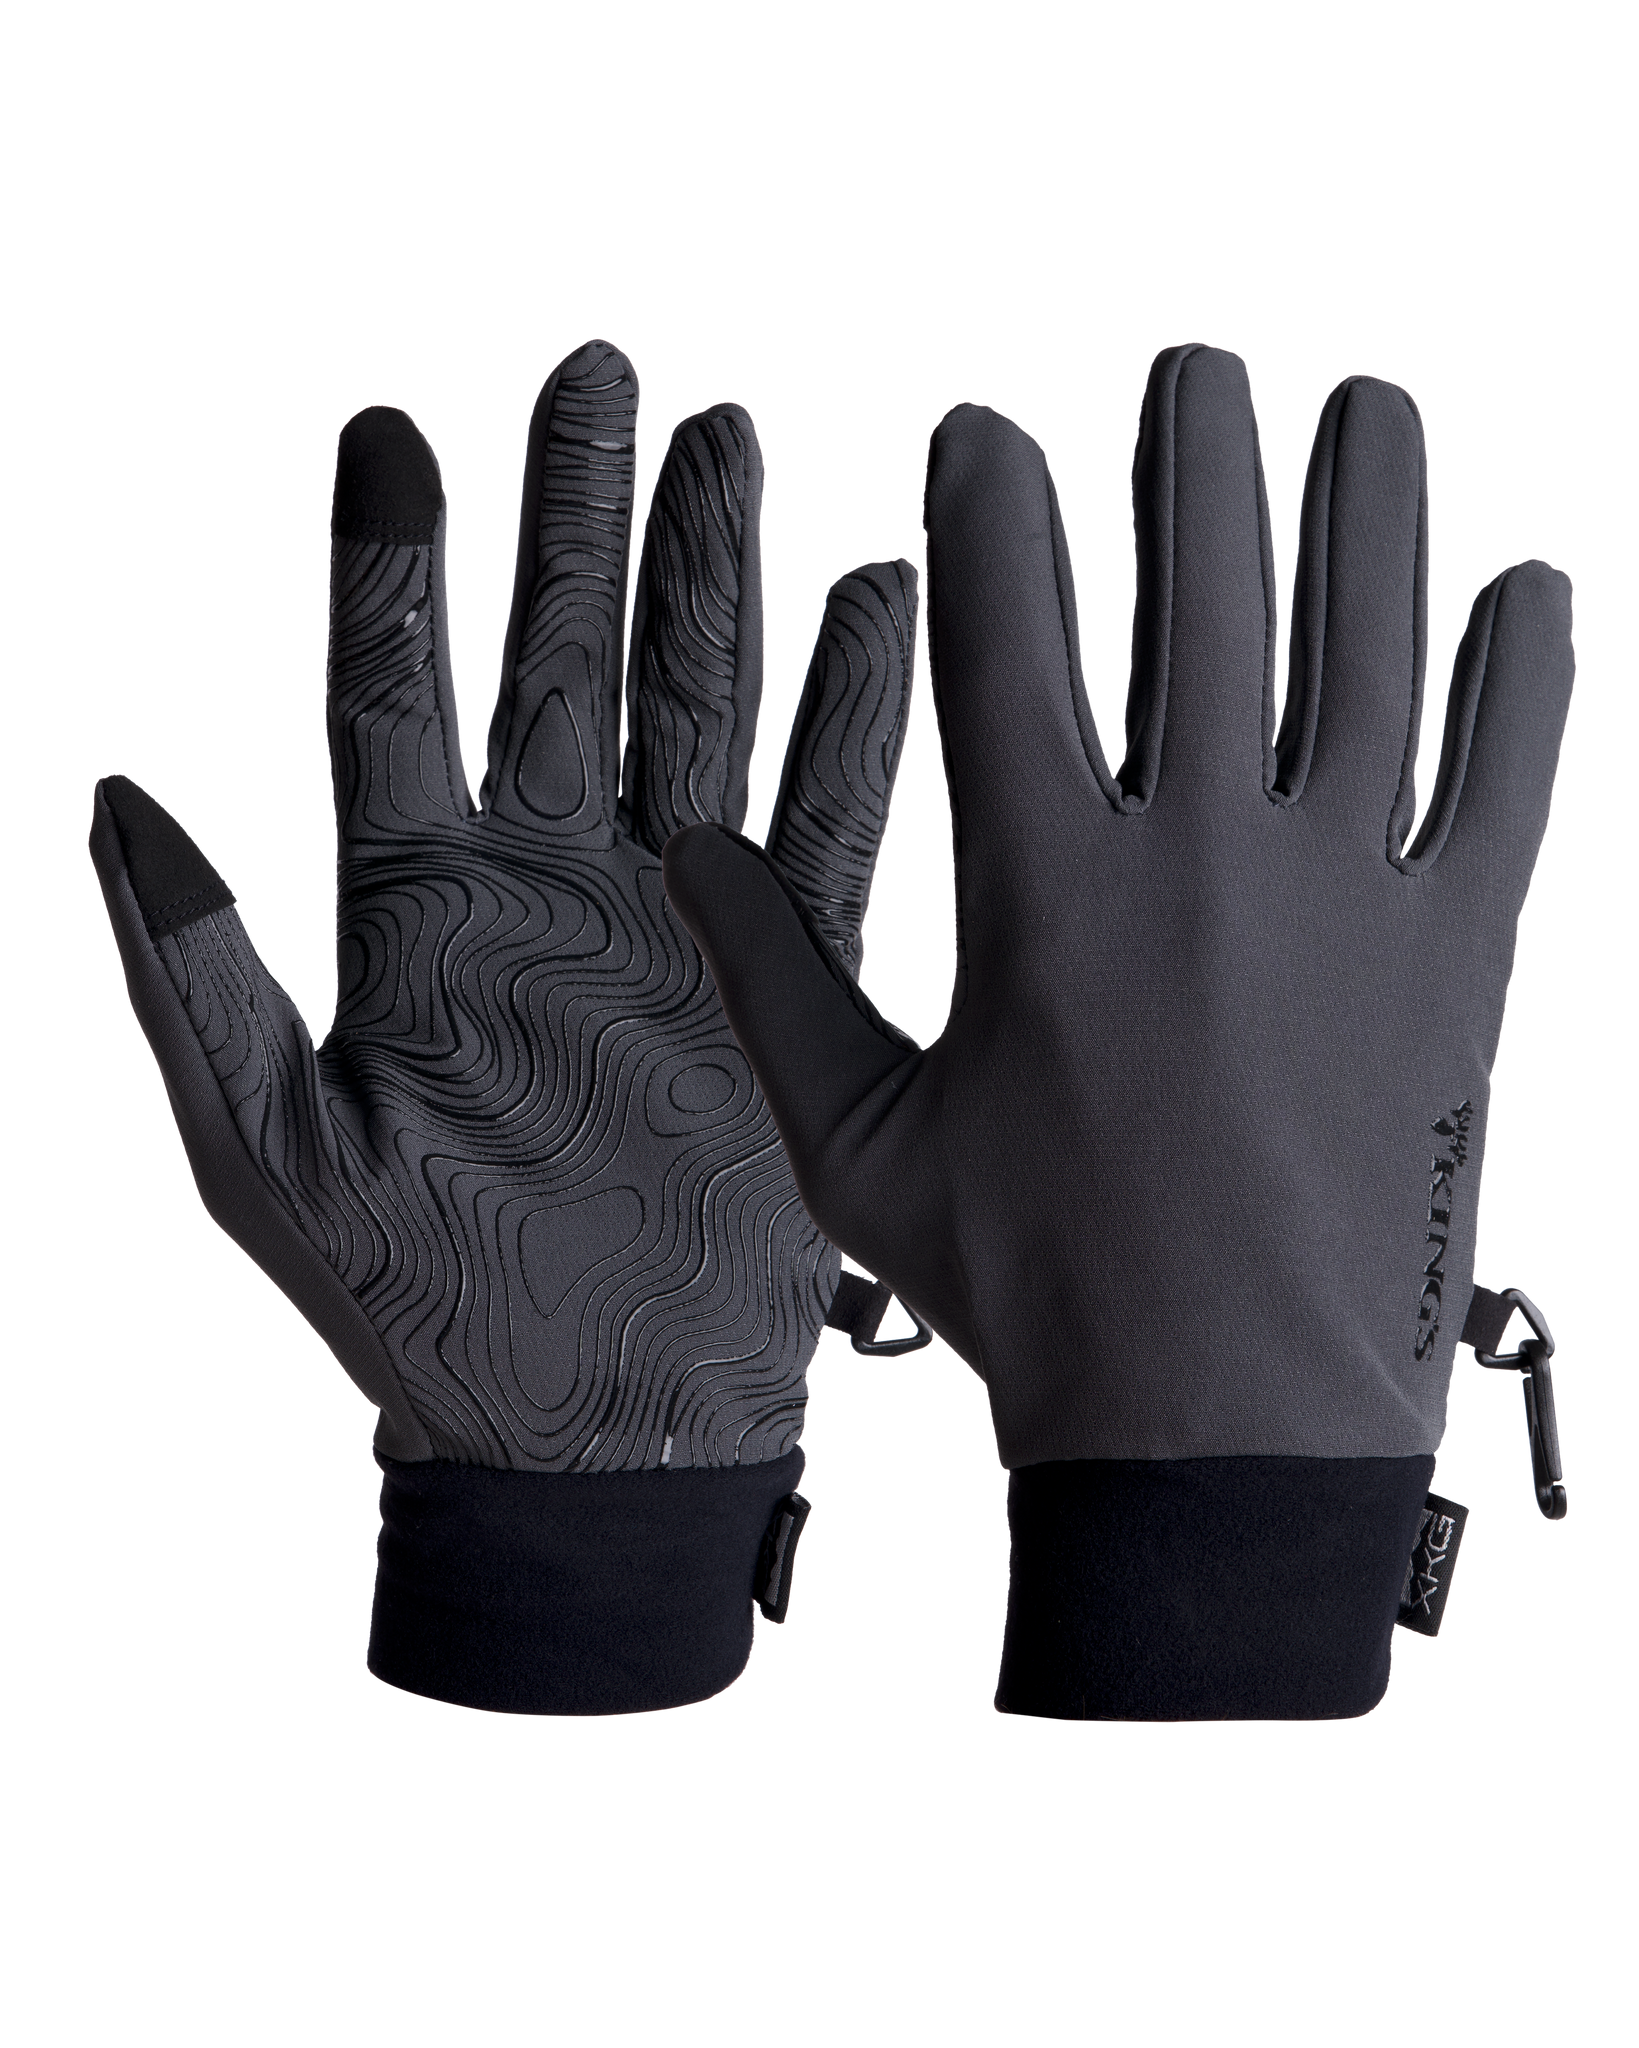 XKG Lightweight Gloves